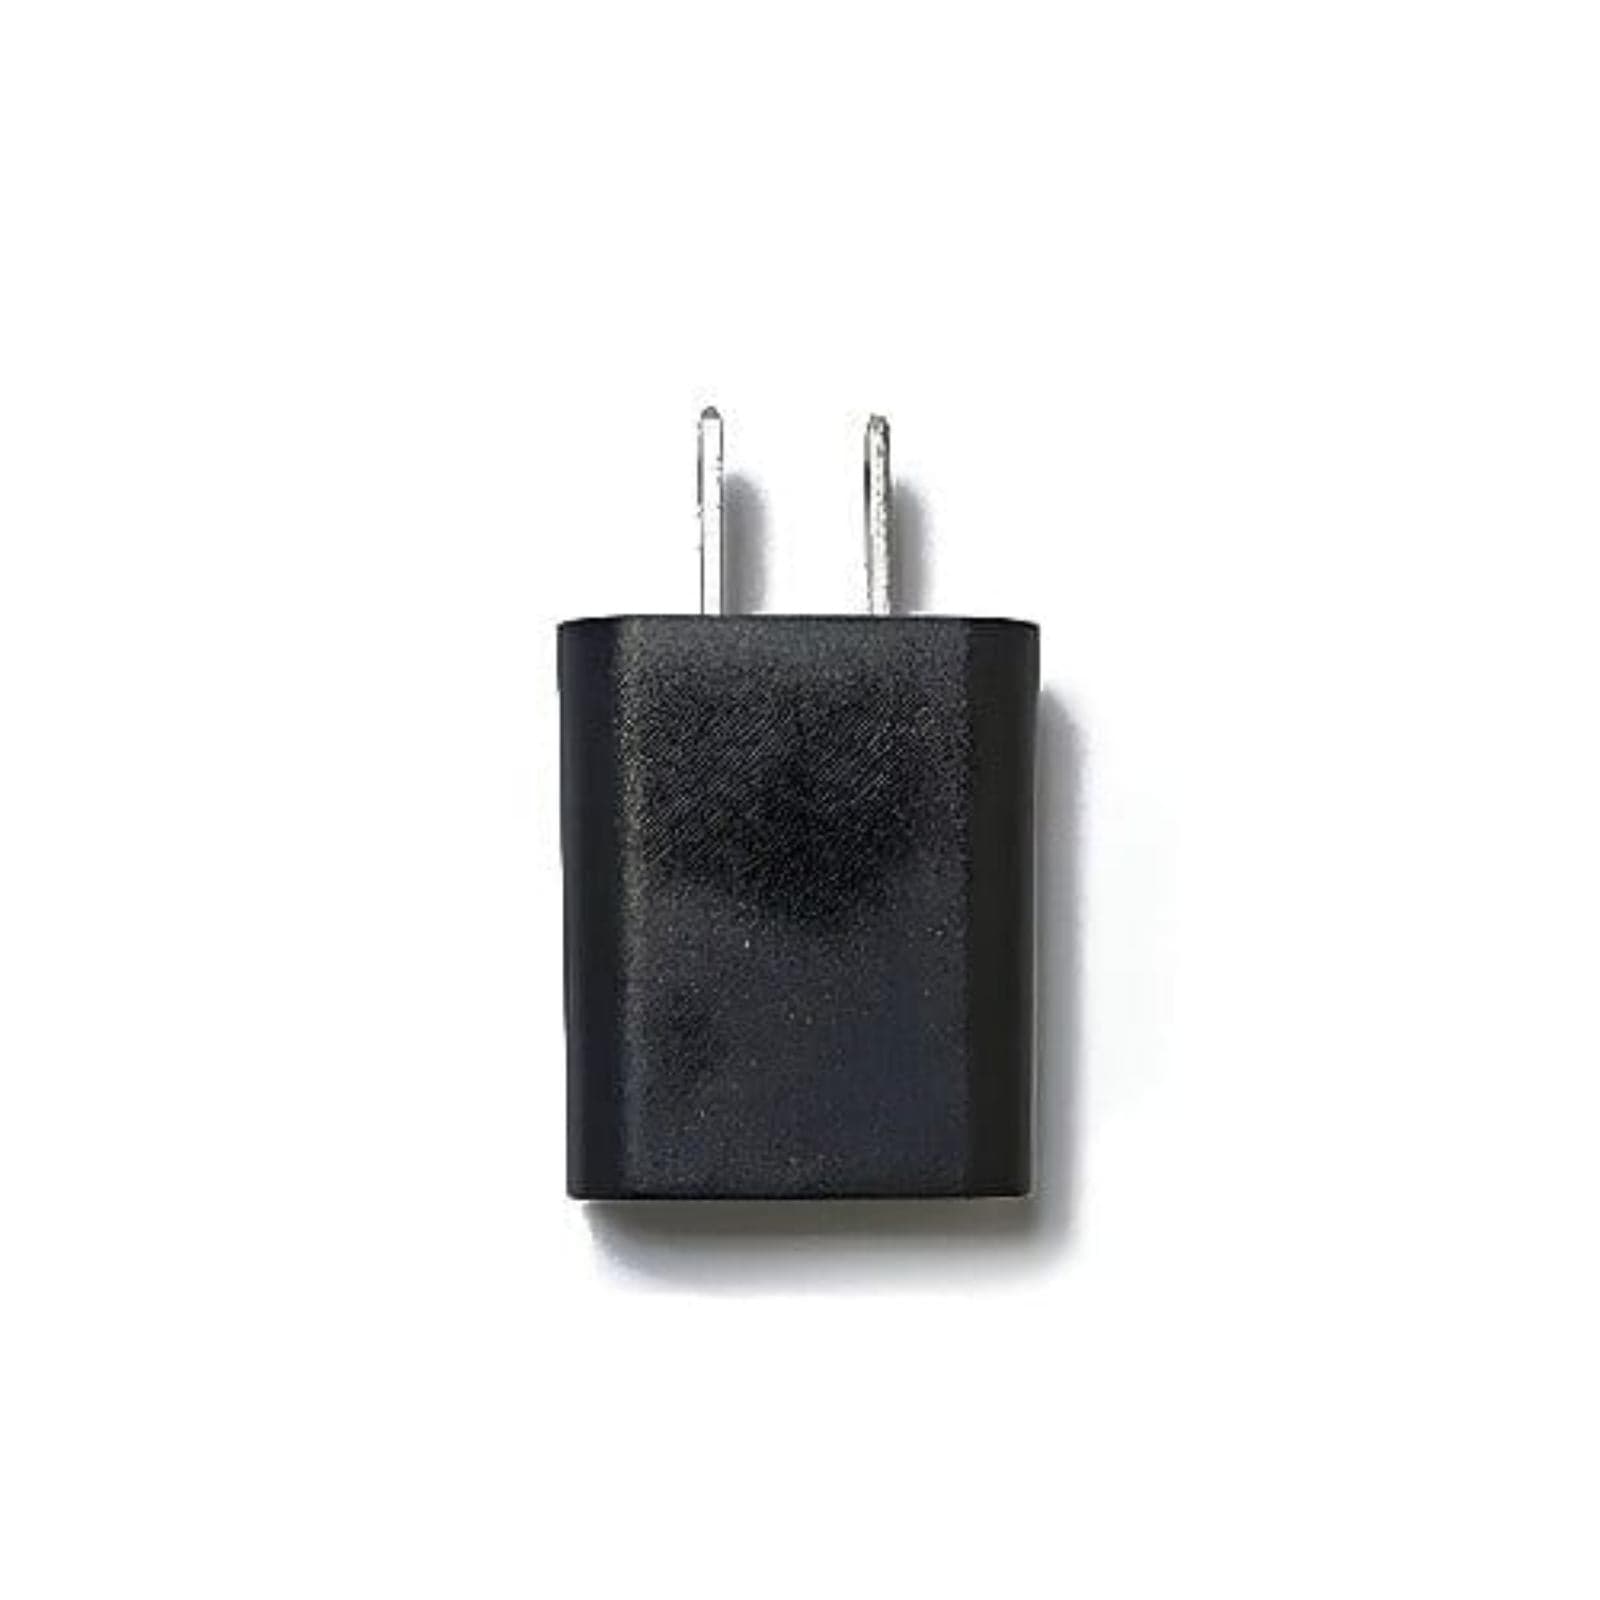 WinBridge 5V 2A USB Wall Plug for M801, S96, T7, T8